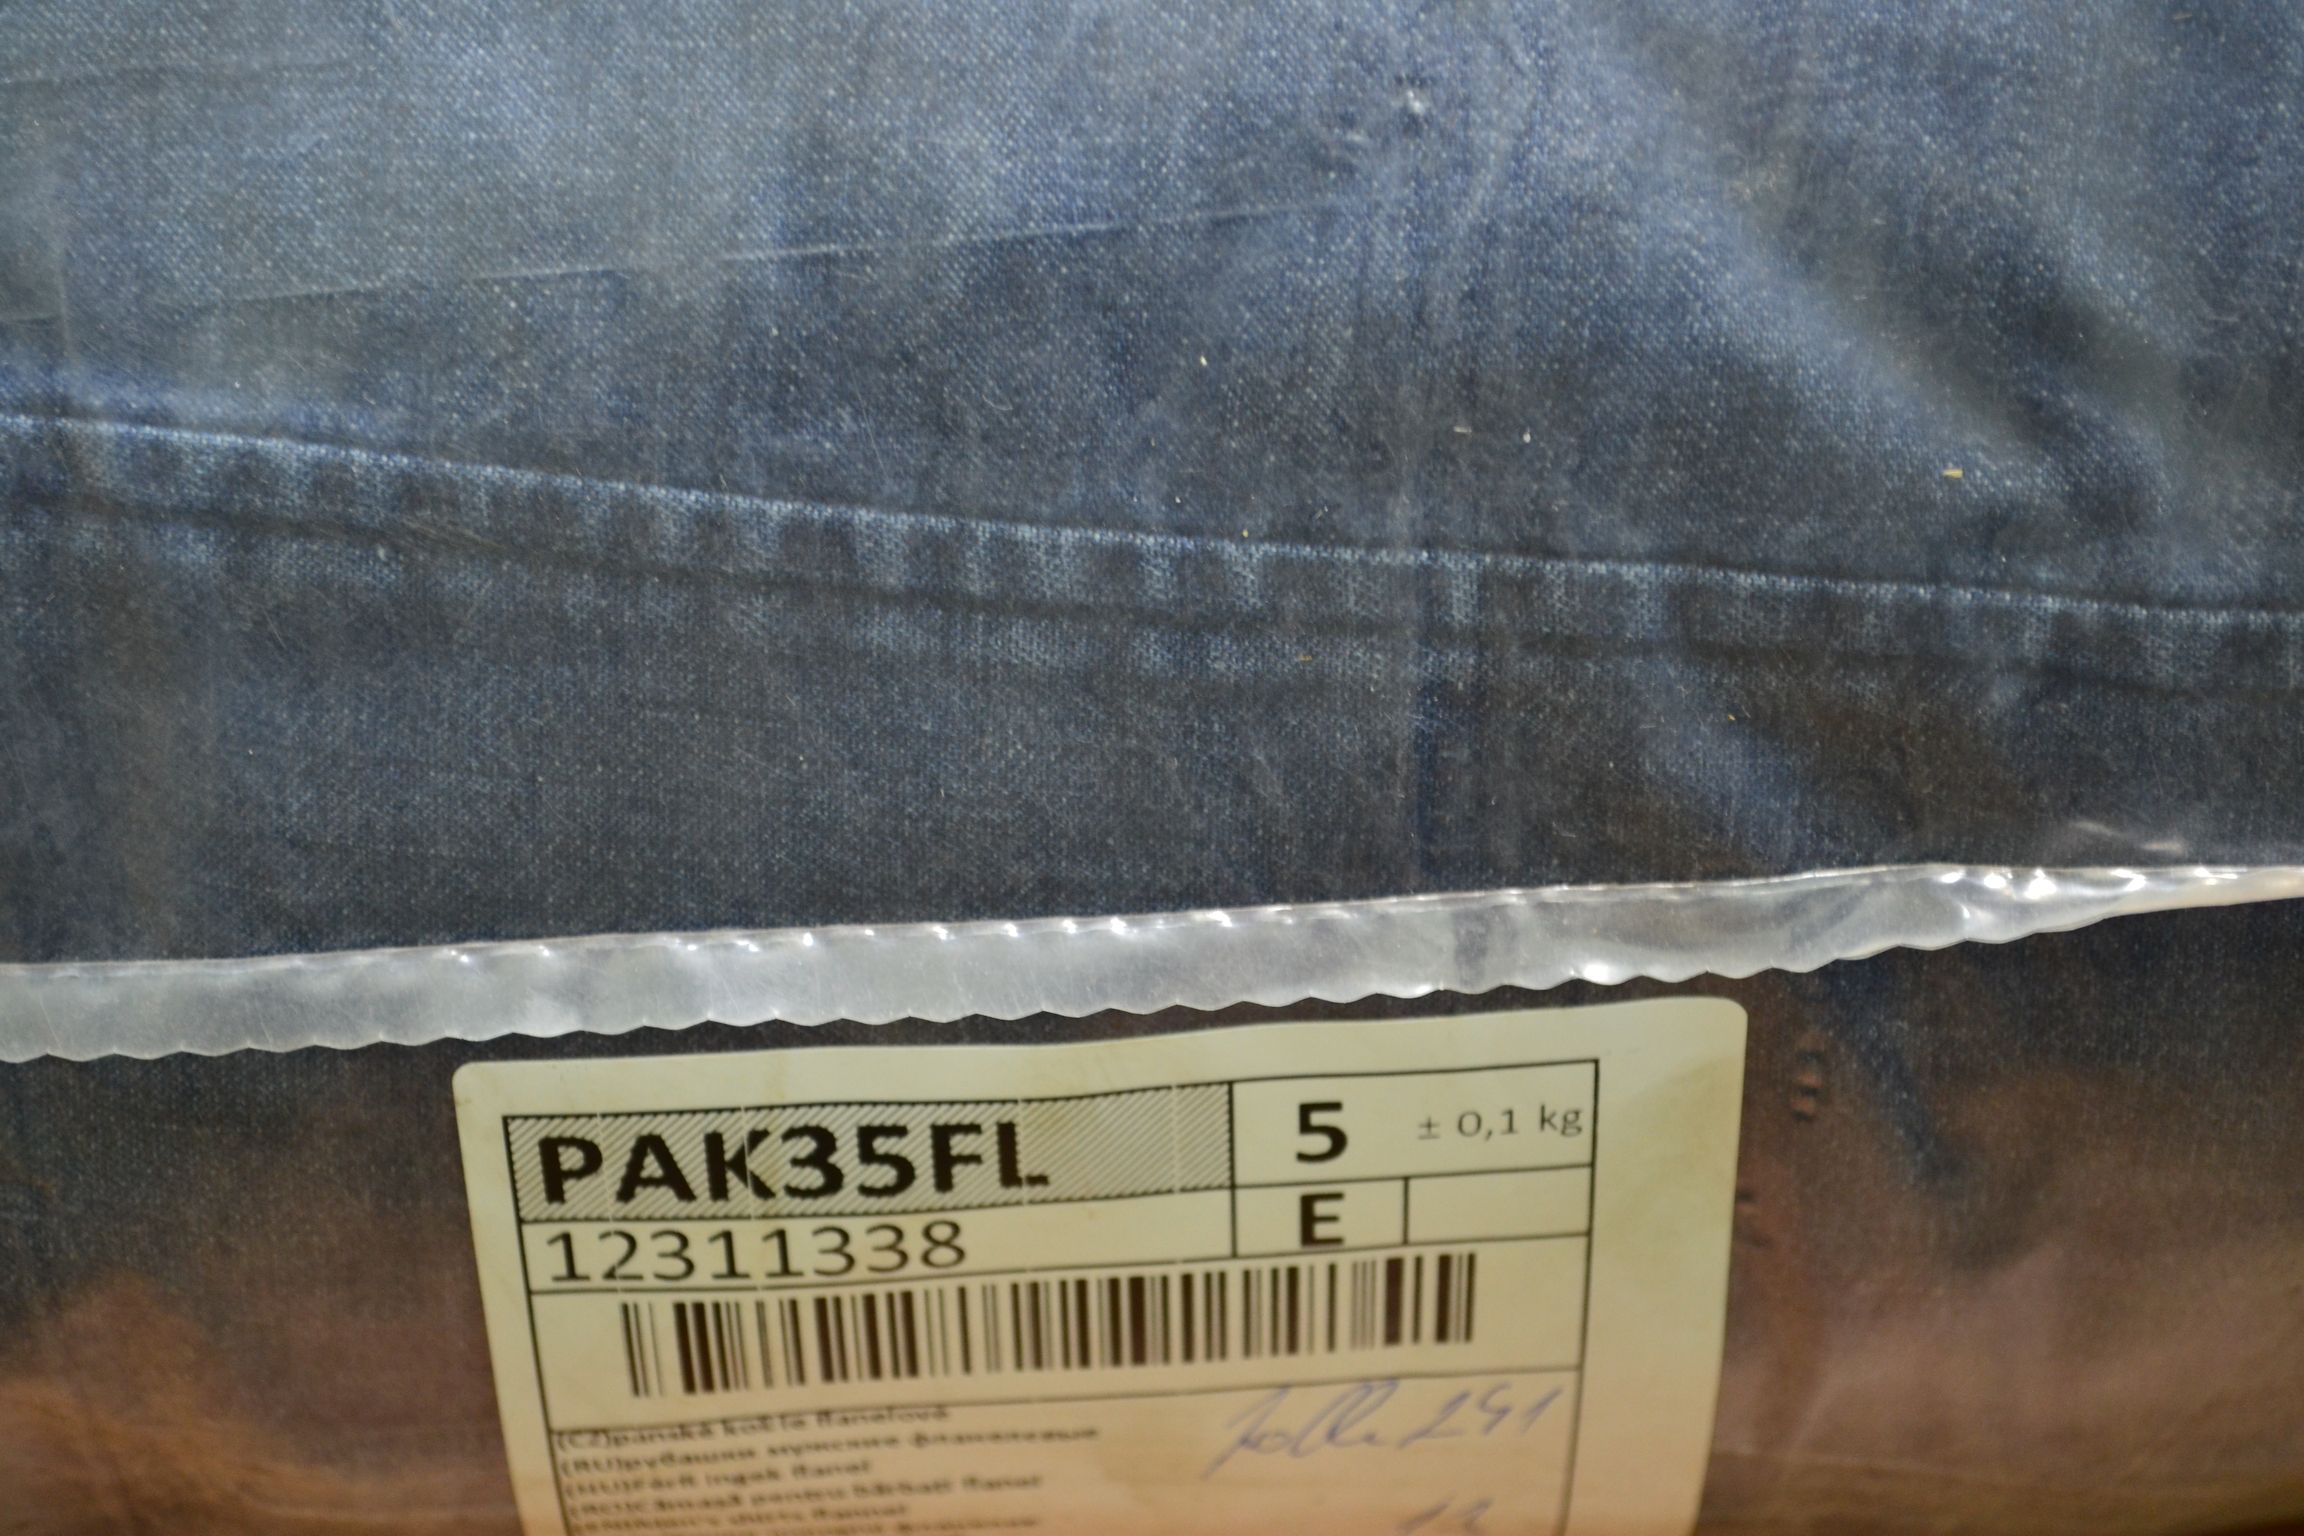 PAK35FL Мужские рубашки теплые; код мешка 12311338